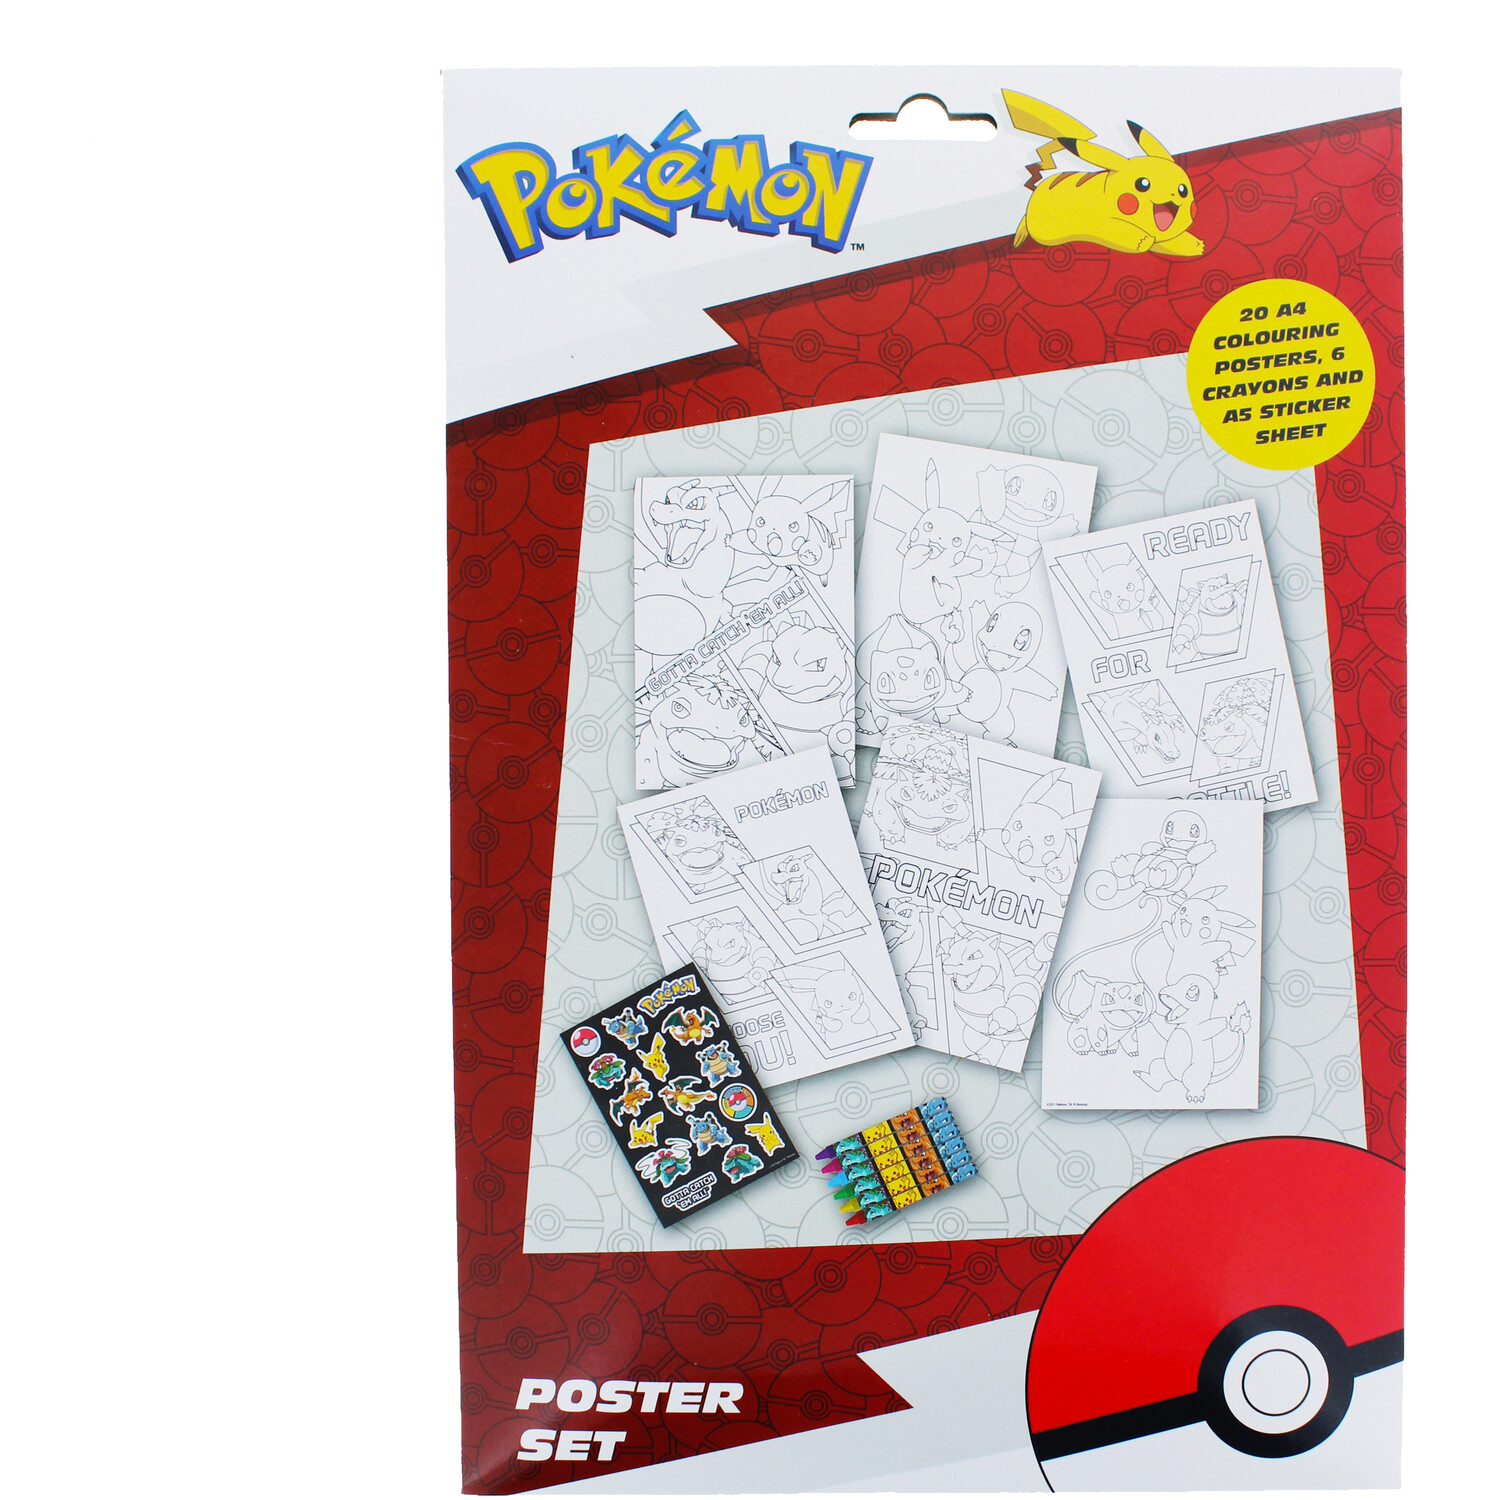 Pokemon Poster Set Image 1